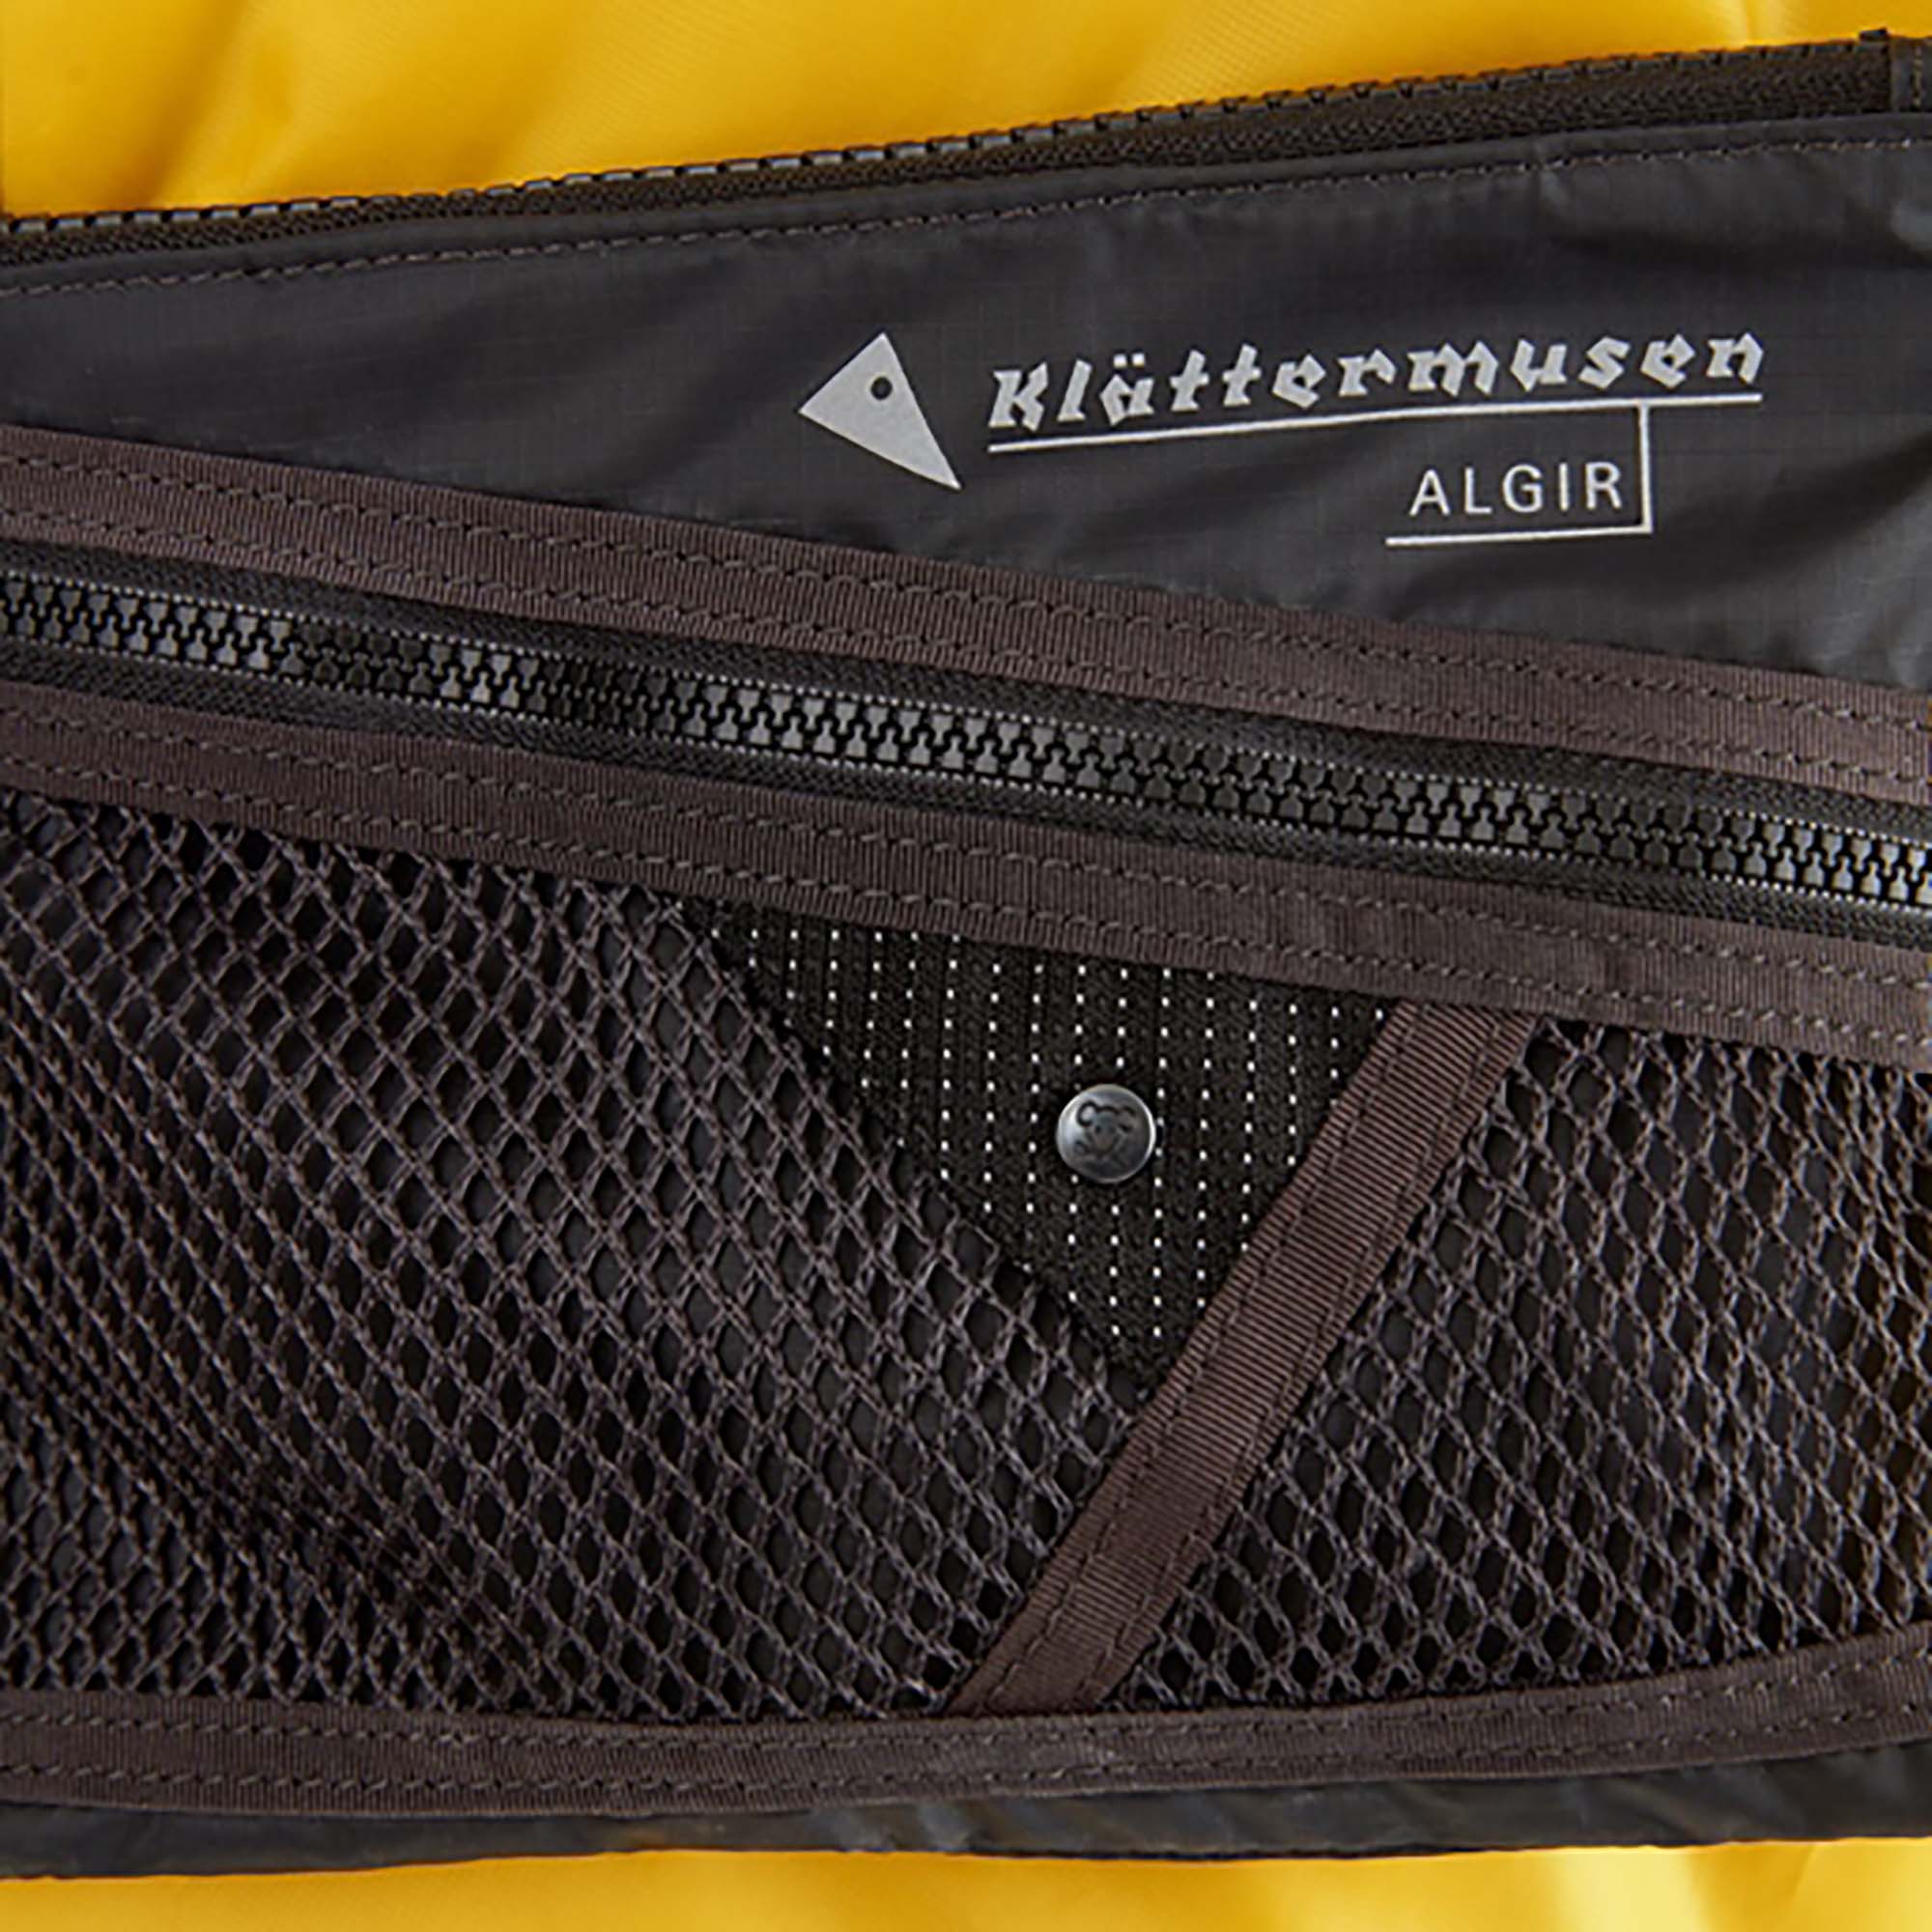 Klattermusen Algir Small Shoulder Bag & Backpack Accessory 